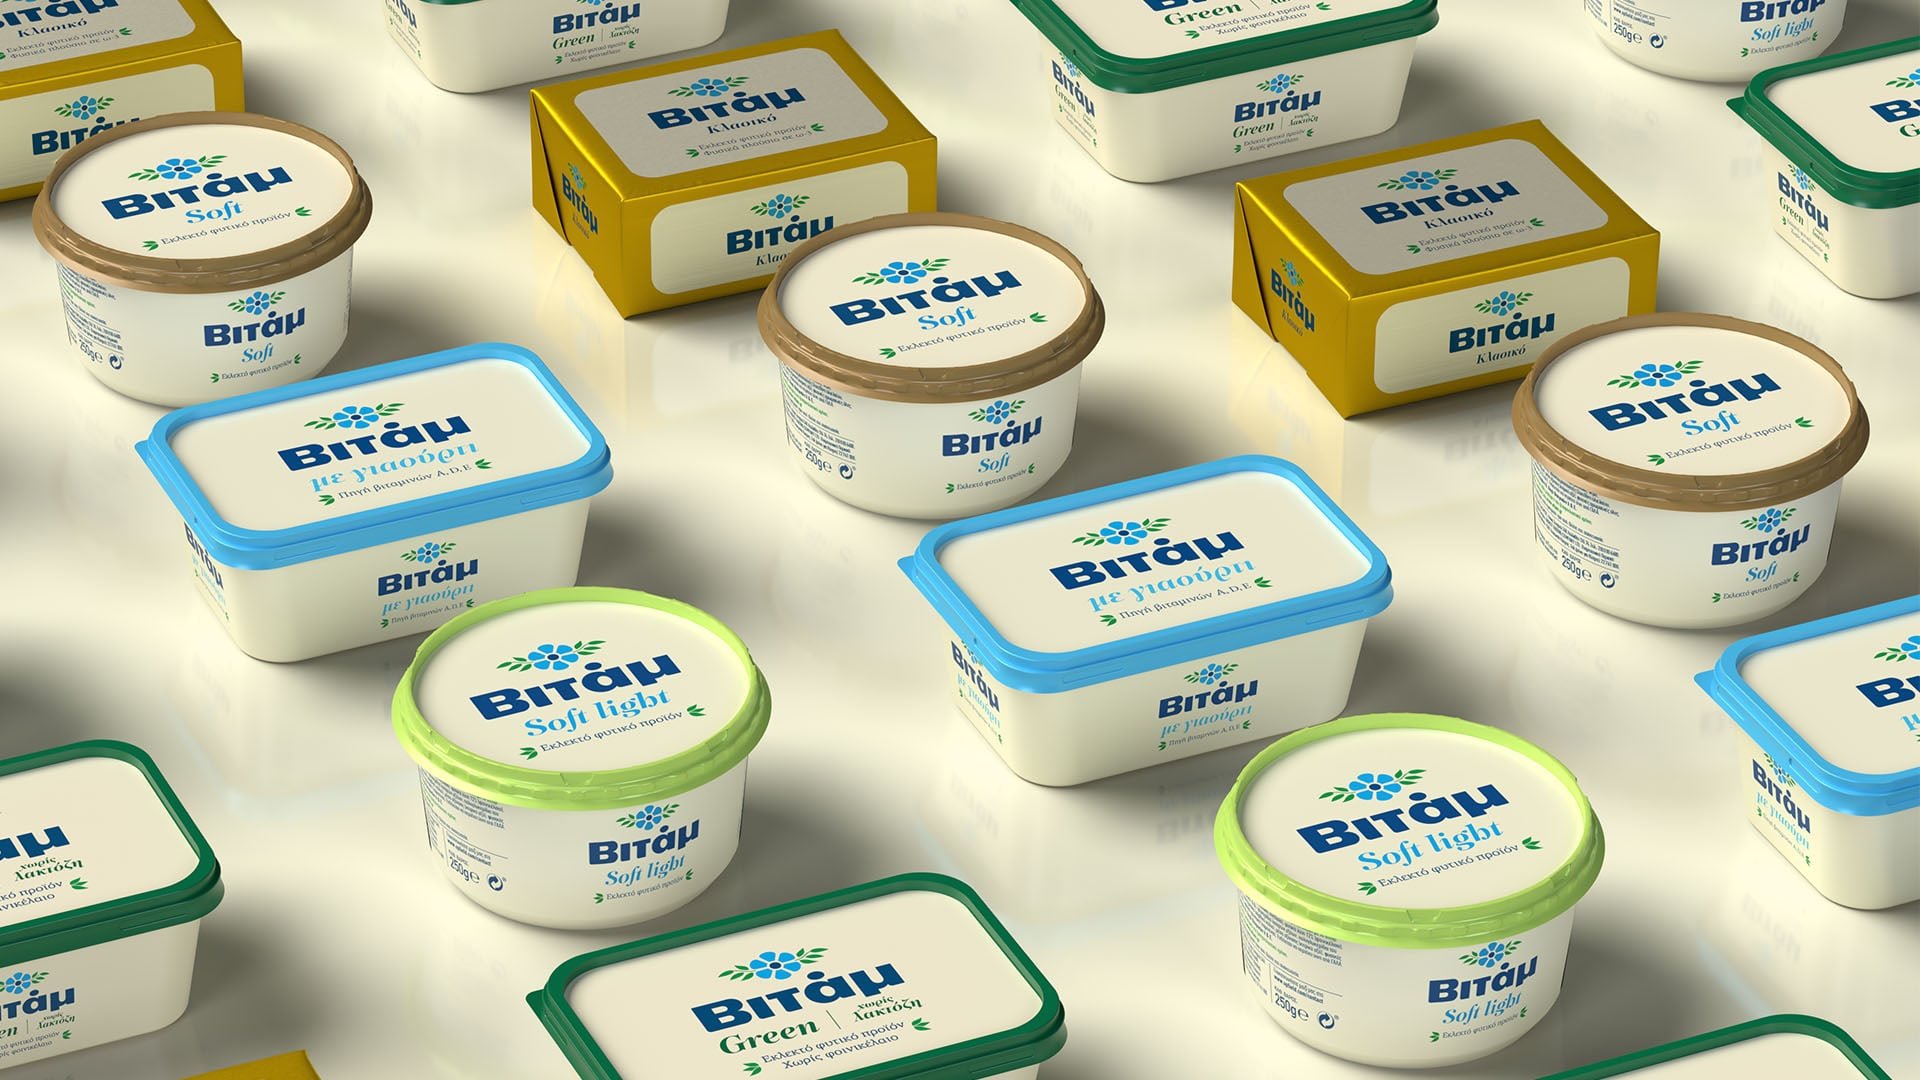 Rebranded Vitam spread SKUs aligned including Vitam wrapper, Vitam Soft and Vitam with Yogurt